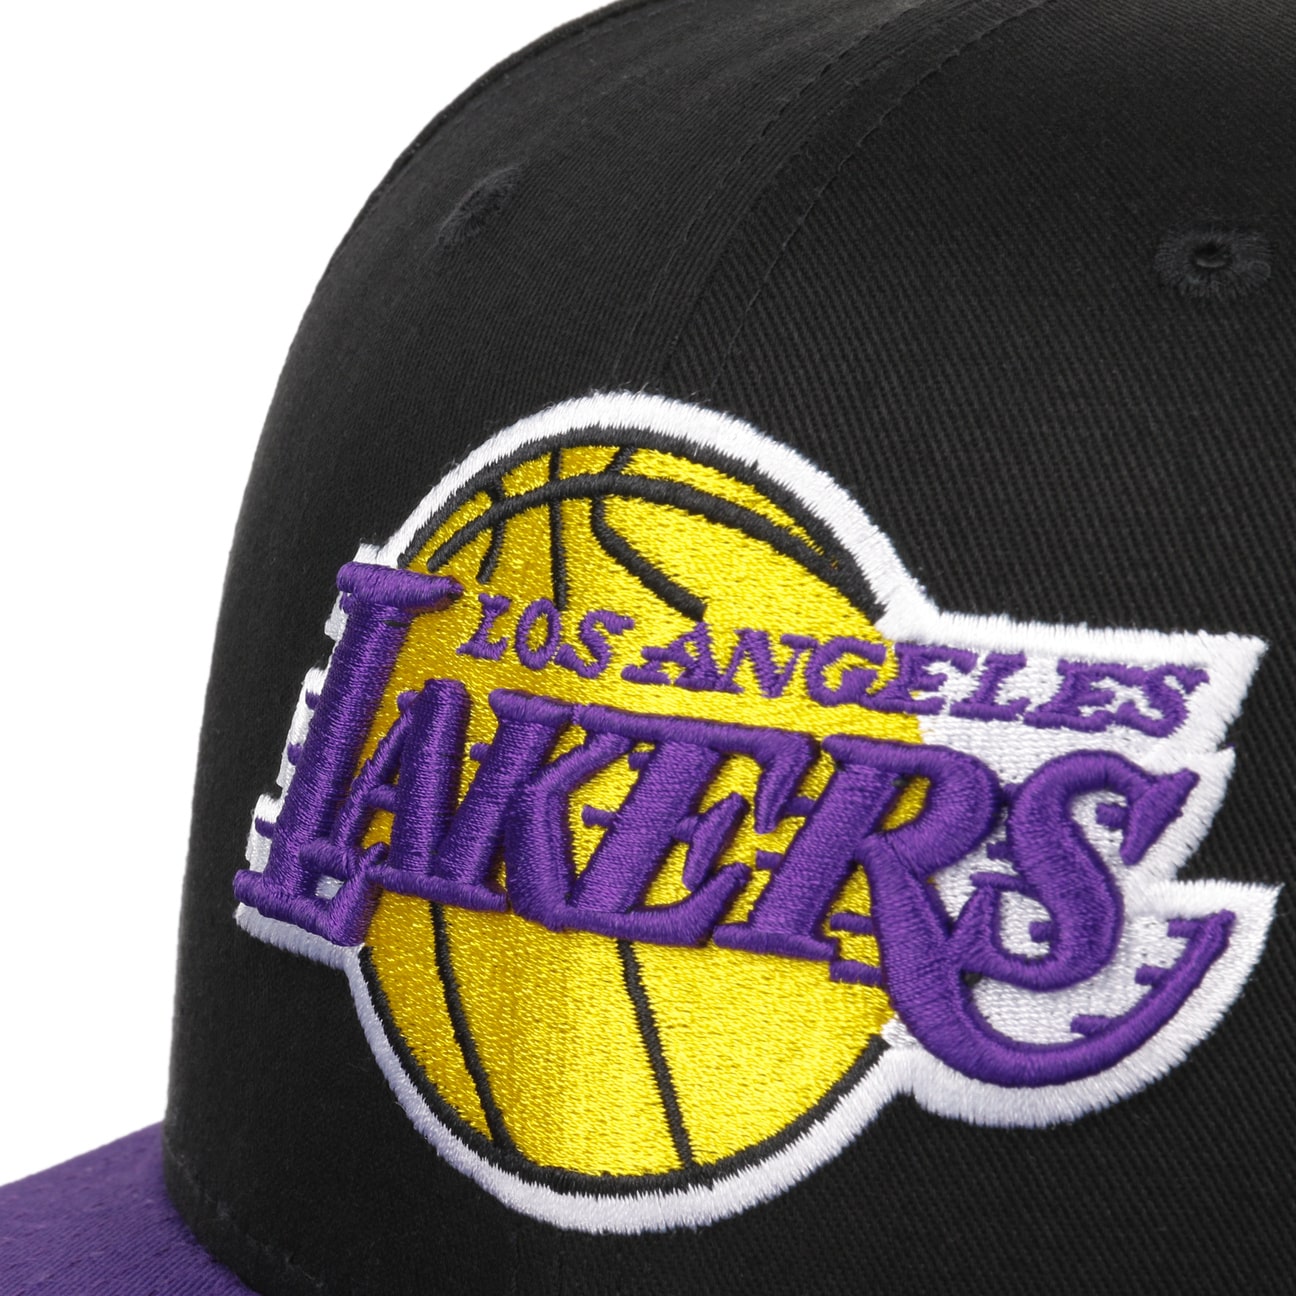 New Era Oversize Los Angeles Lakers Cap Purple/Black